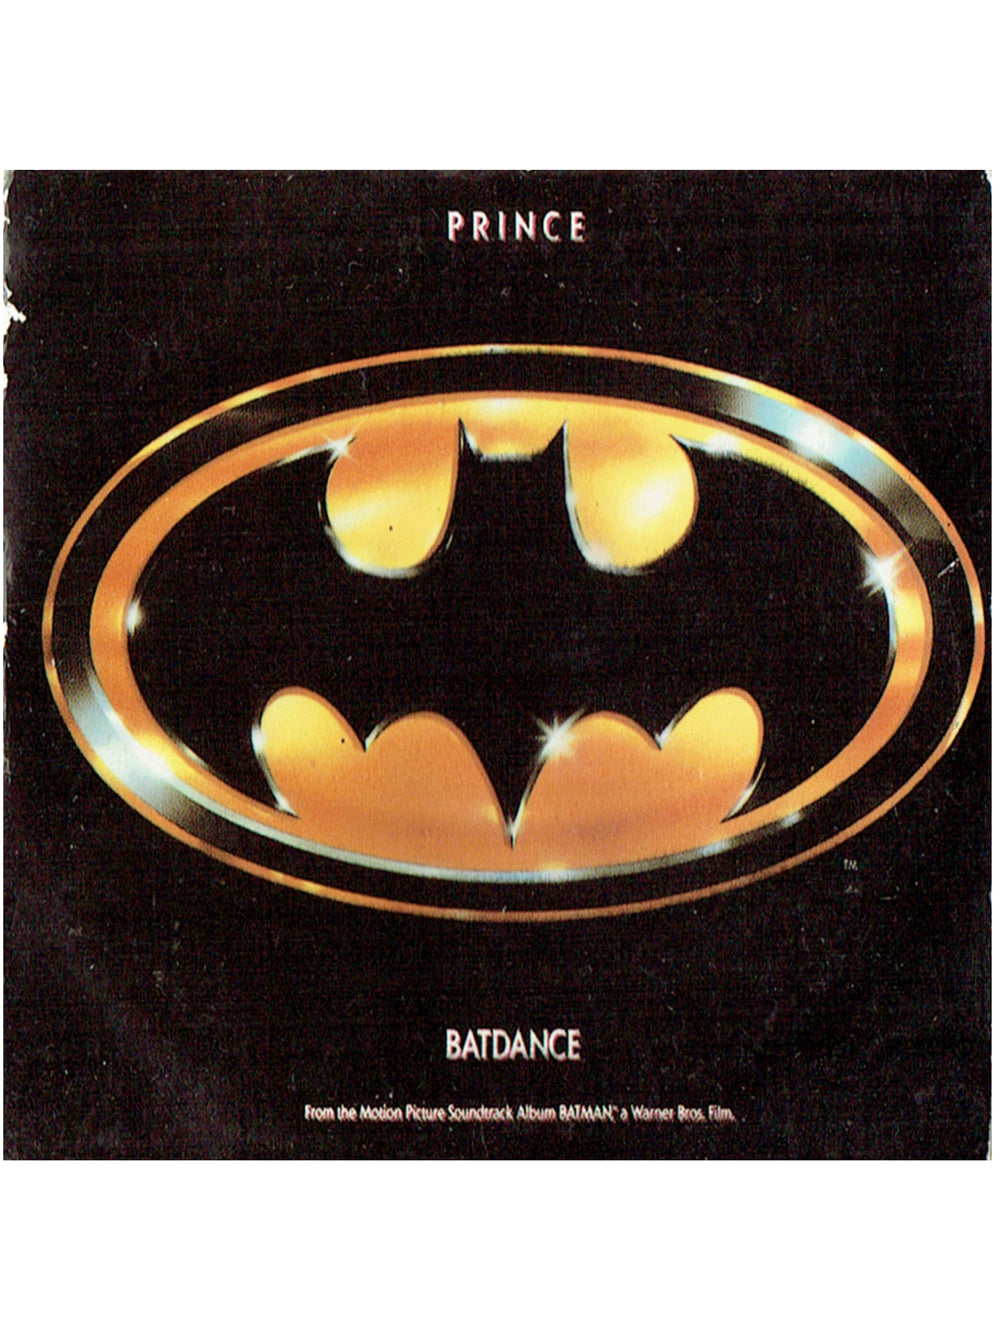 Prince BATDANCE 200 Balloons Original UK Release 3 Inch CD Single